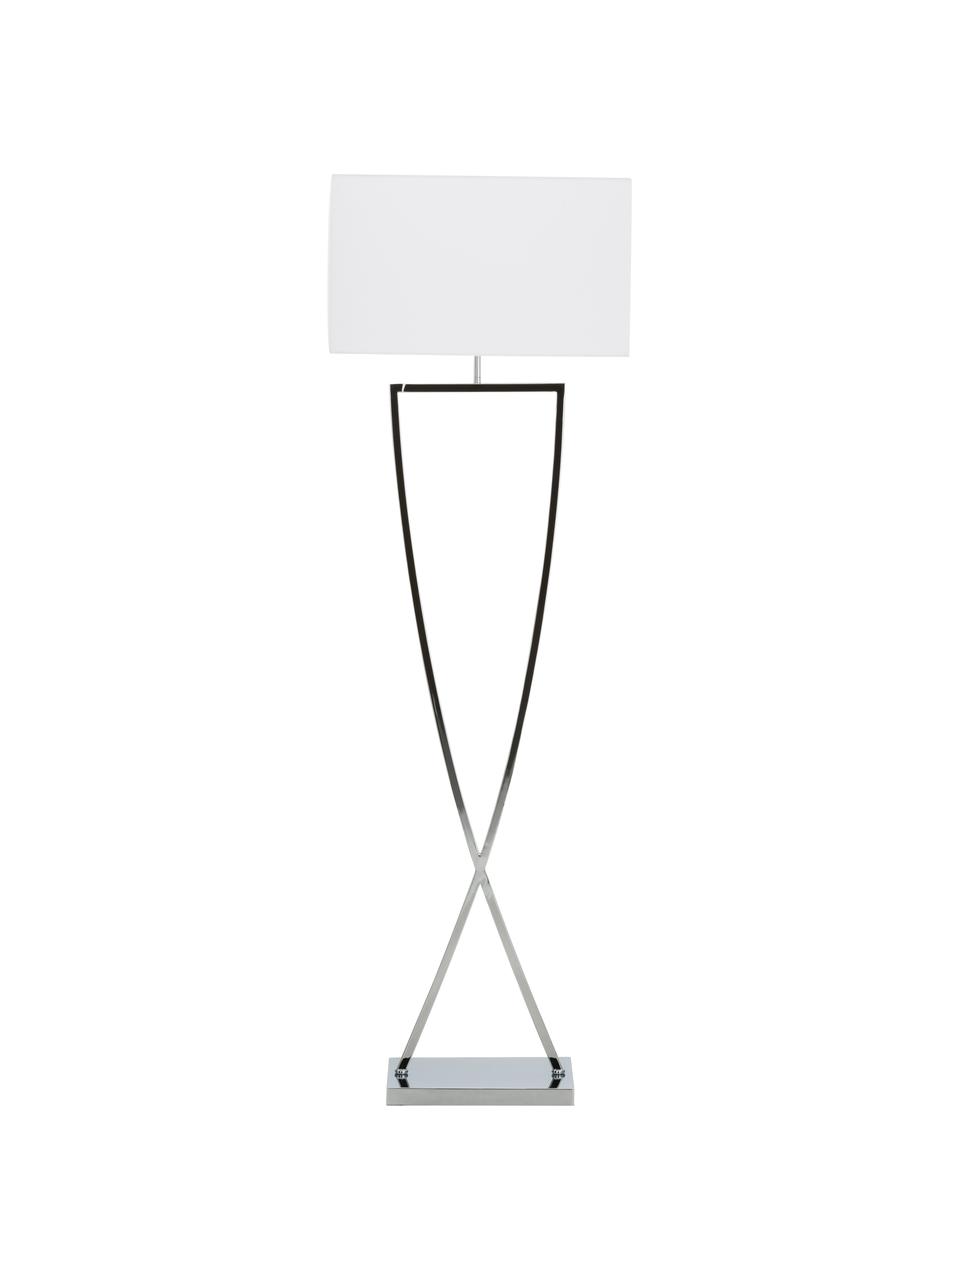 Stehlampe Toulouse in Silber, Lampenschirm: Textil, Lampenfuß: Metall, verchromt, Chrom, Weiß, B 50 x H 157 cm